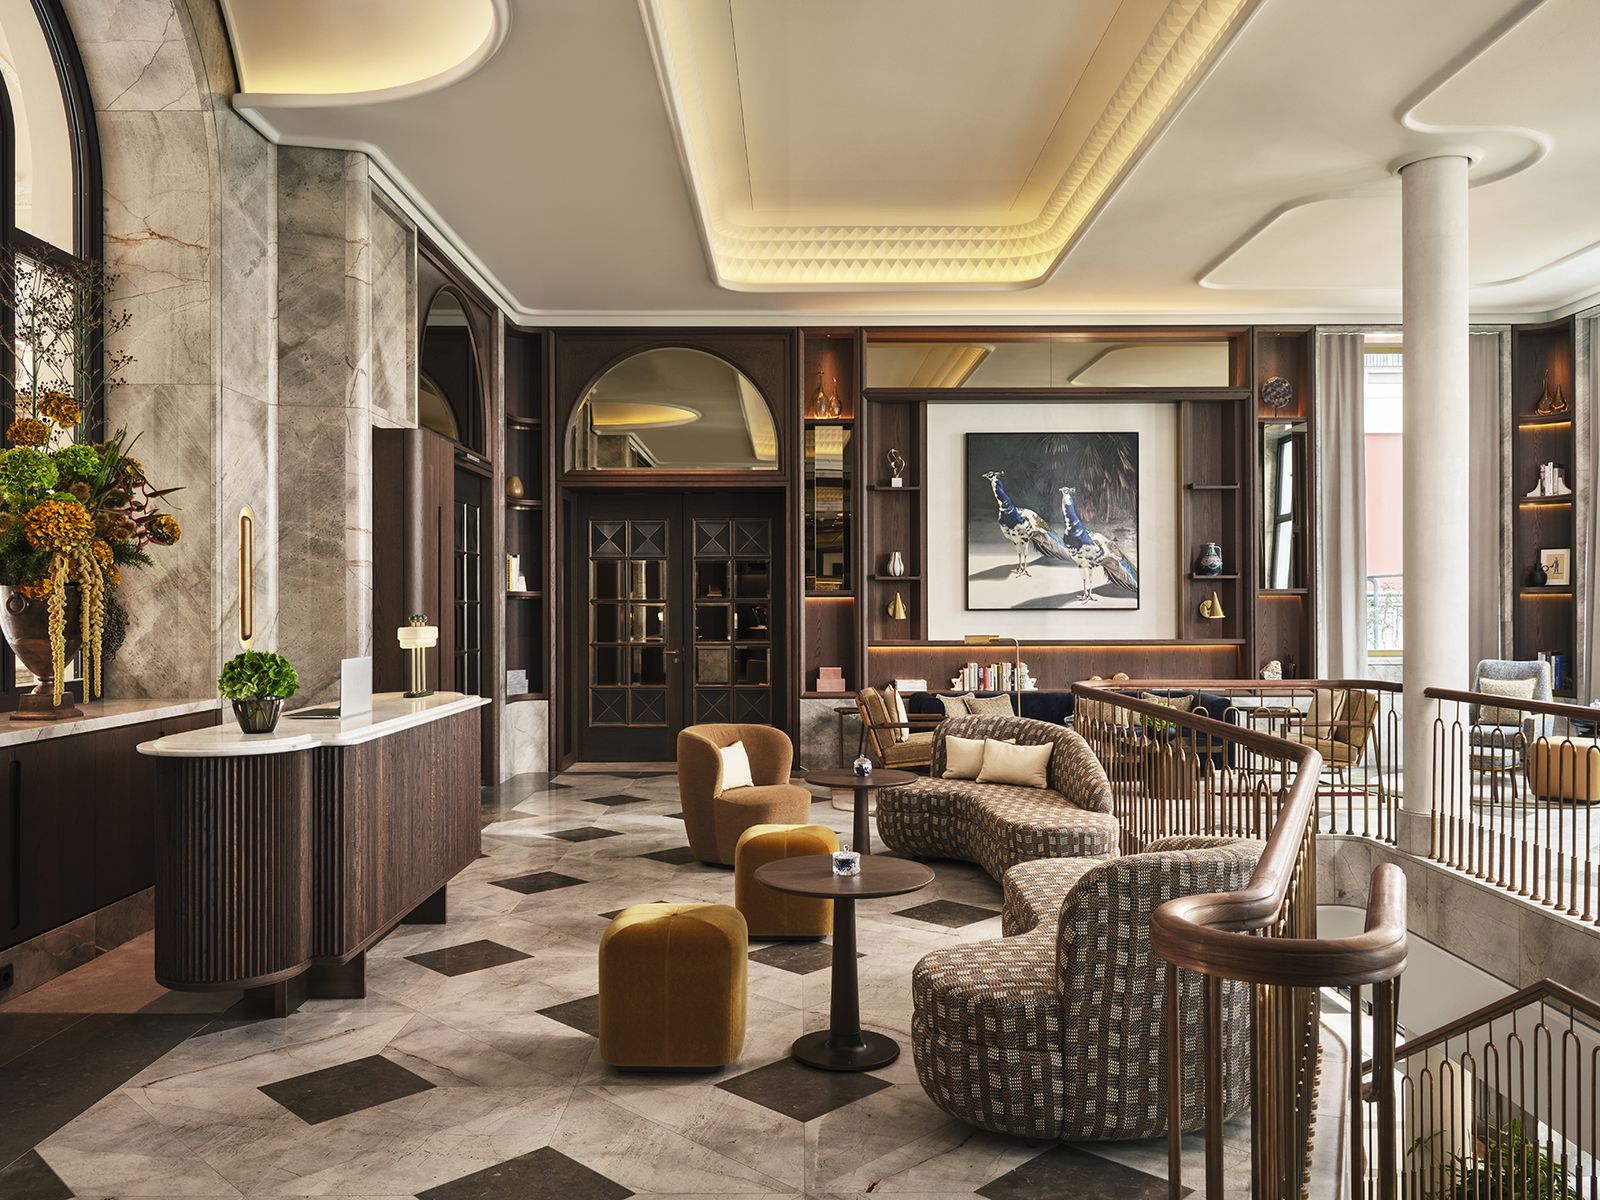 Tour Hotel Rosewood Munich's opulent elegance | Wallpaper